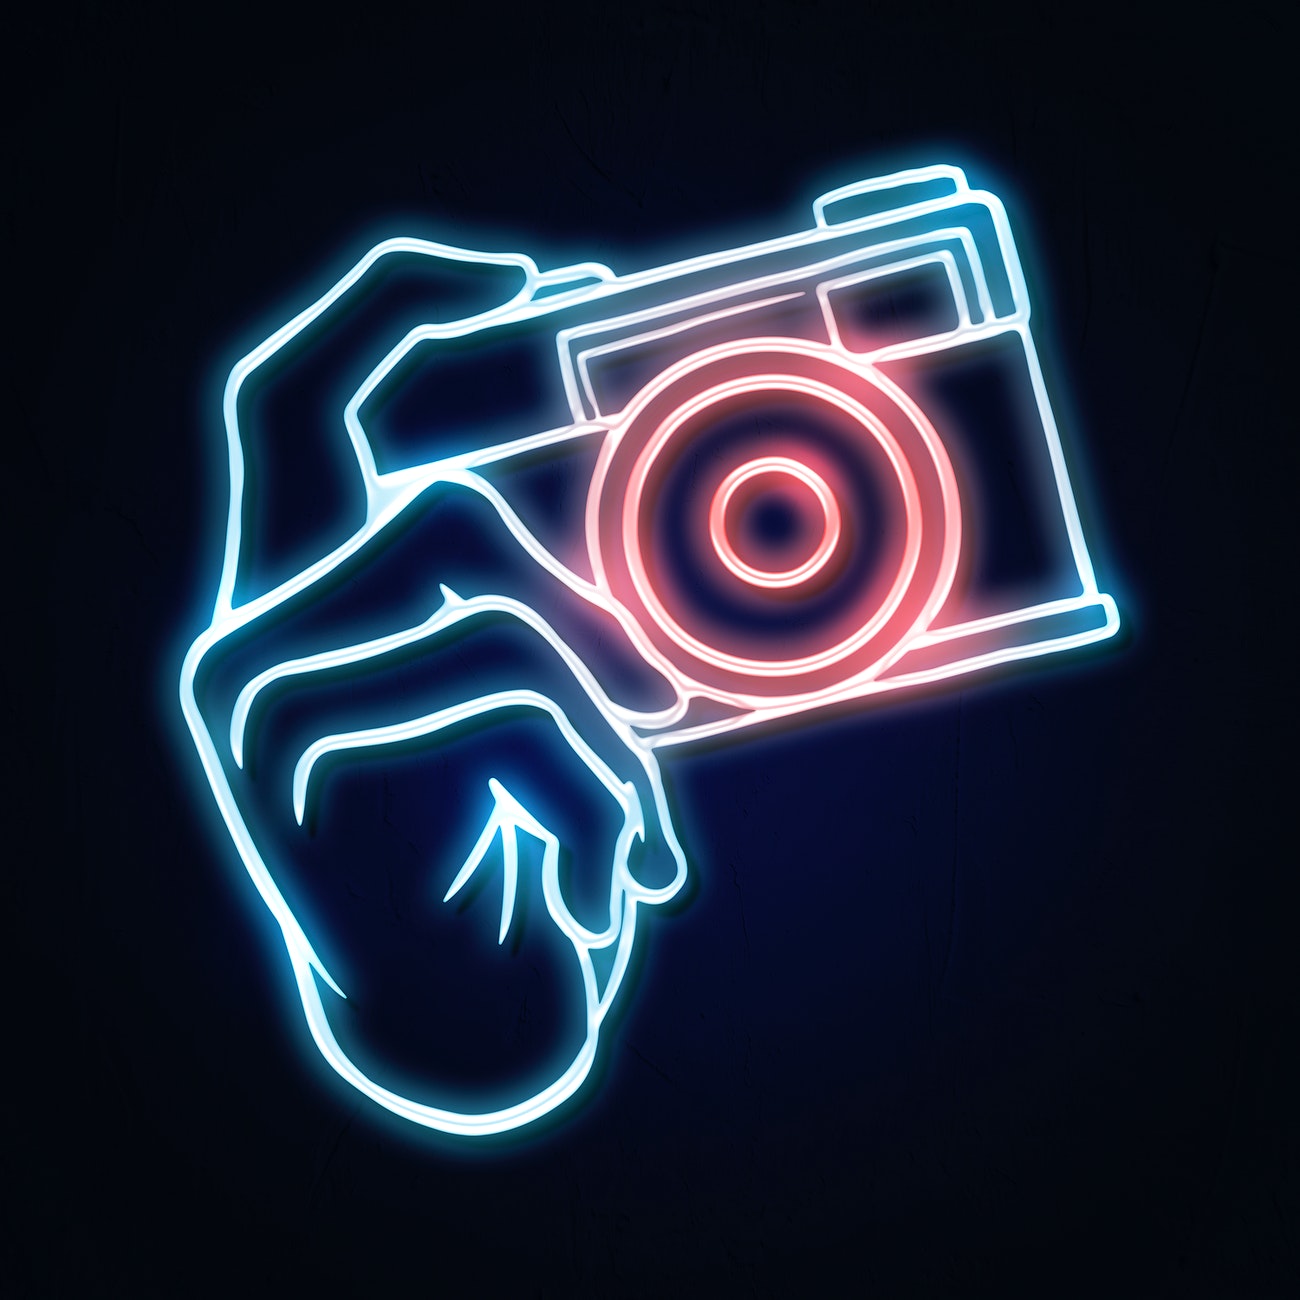 Neon Analog Camera Sticker Overlay On A Black Background Design